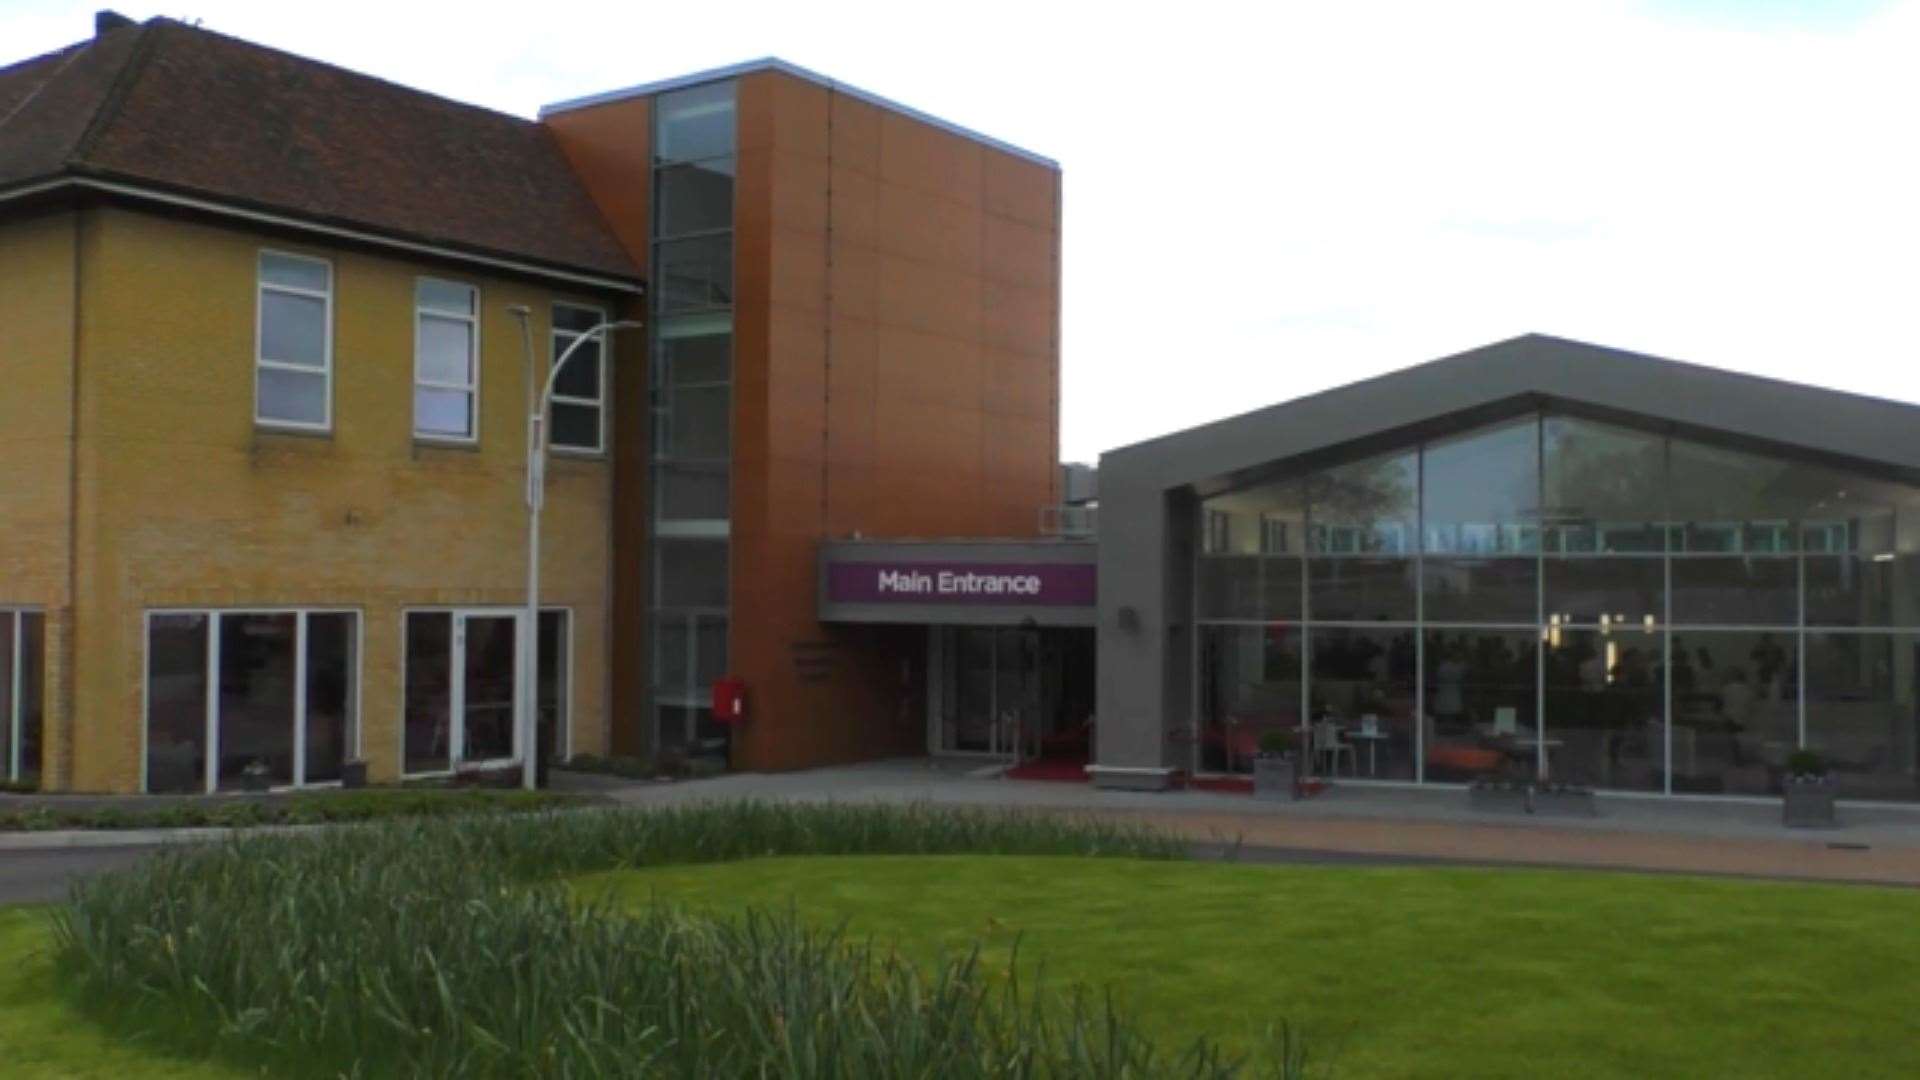 Benenden Hospital had a large refurbishment in 2018